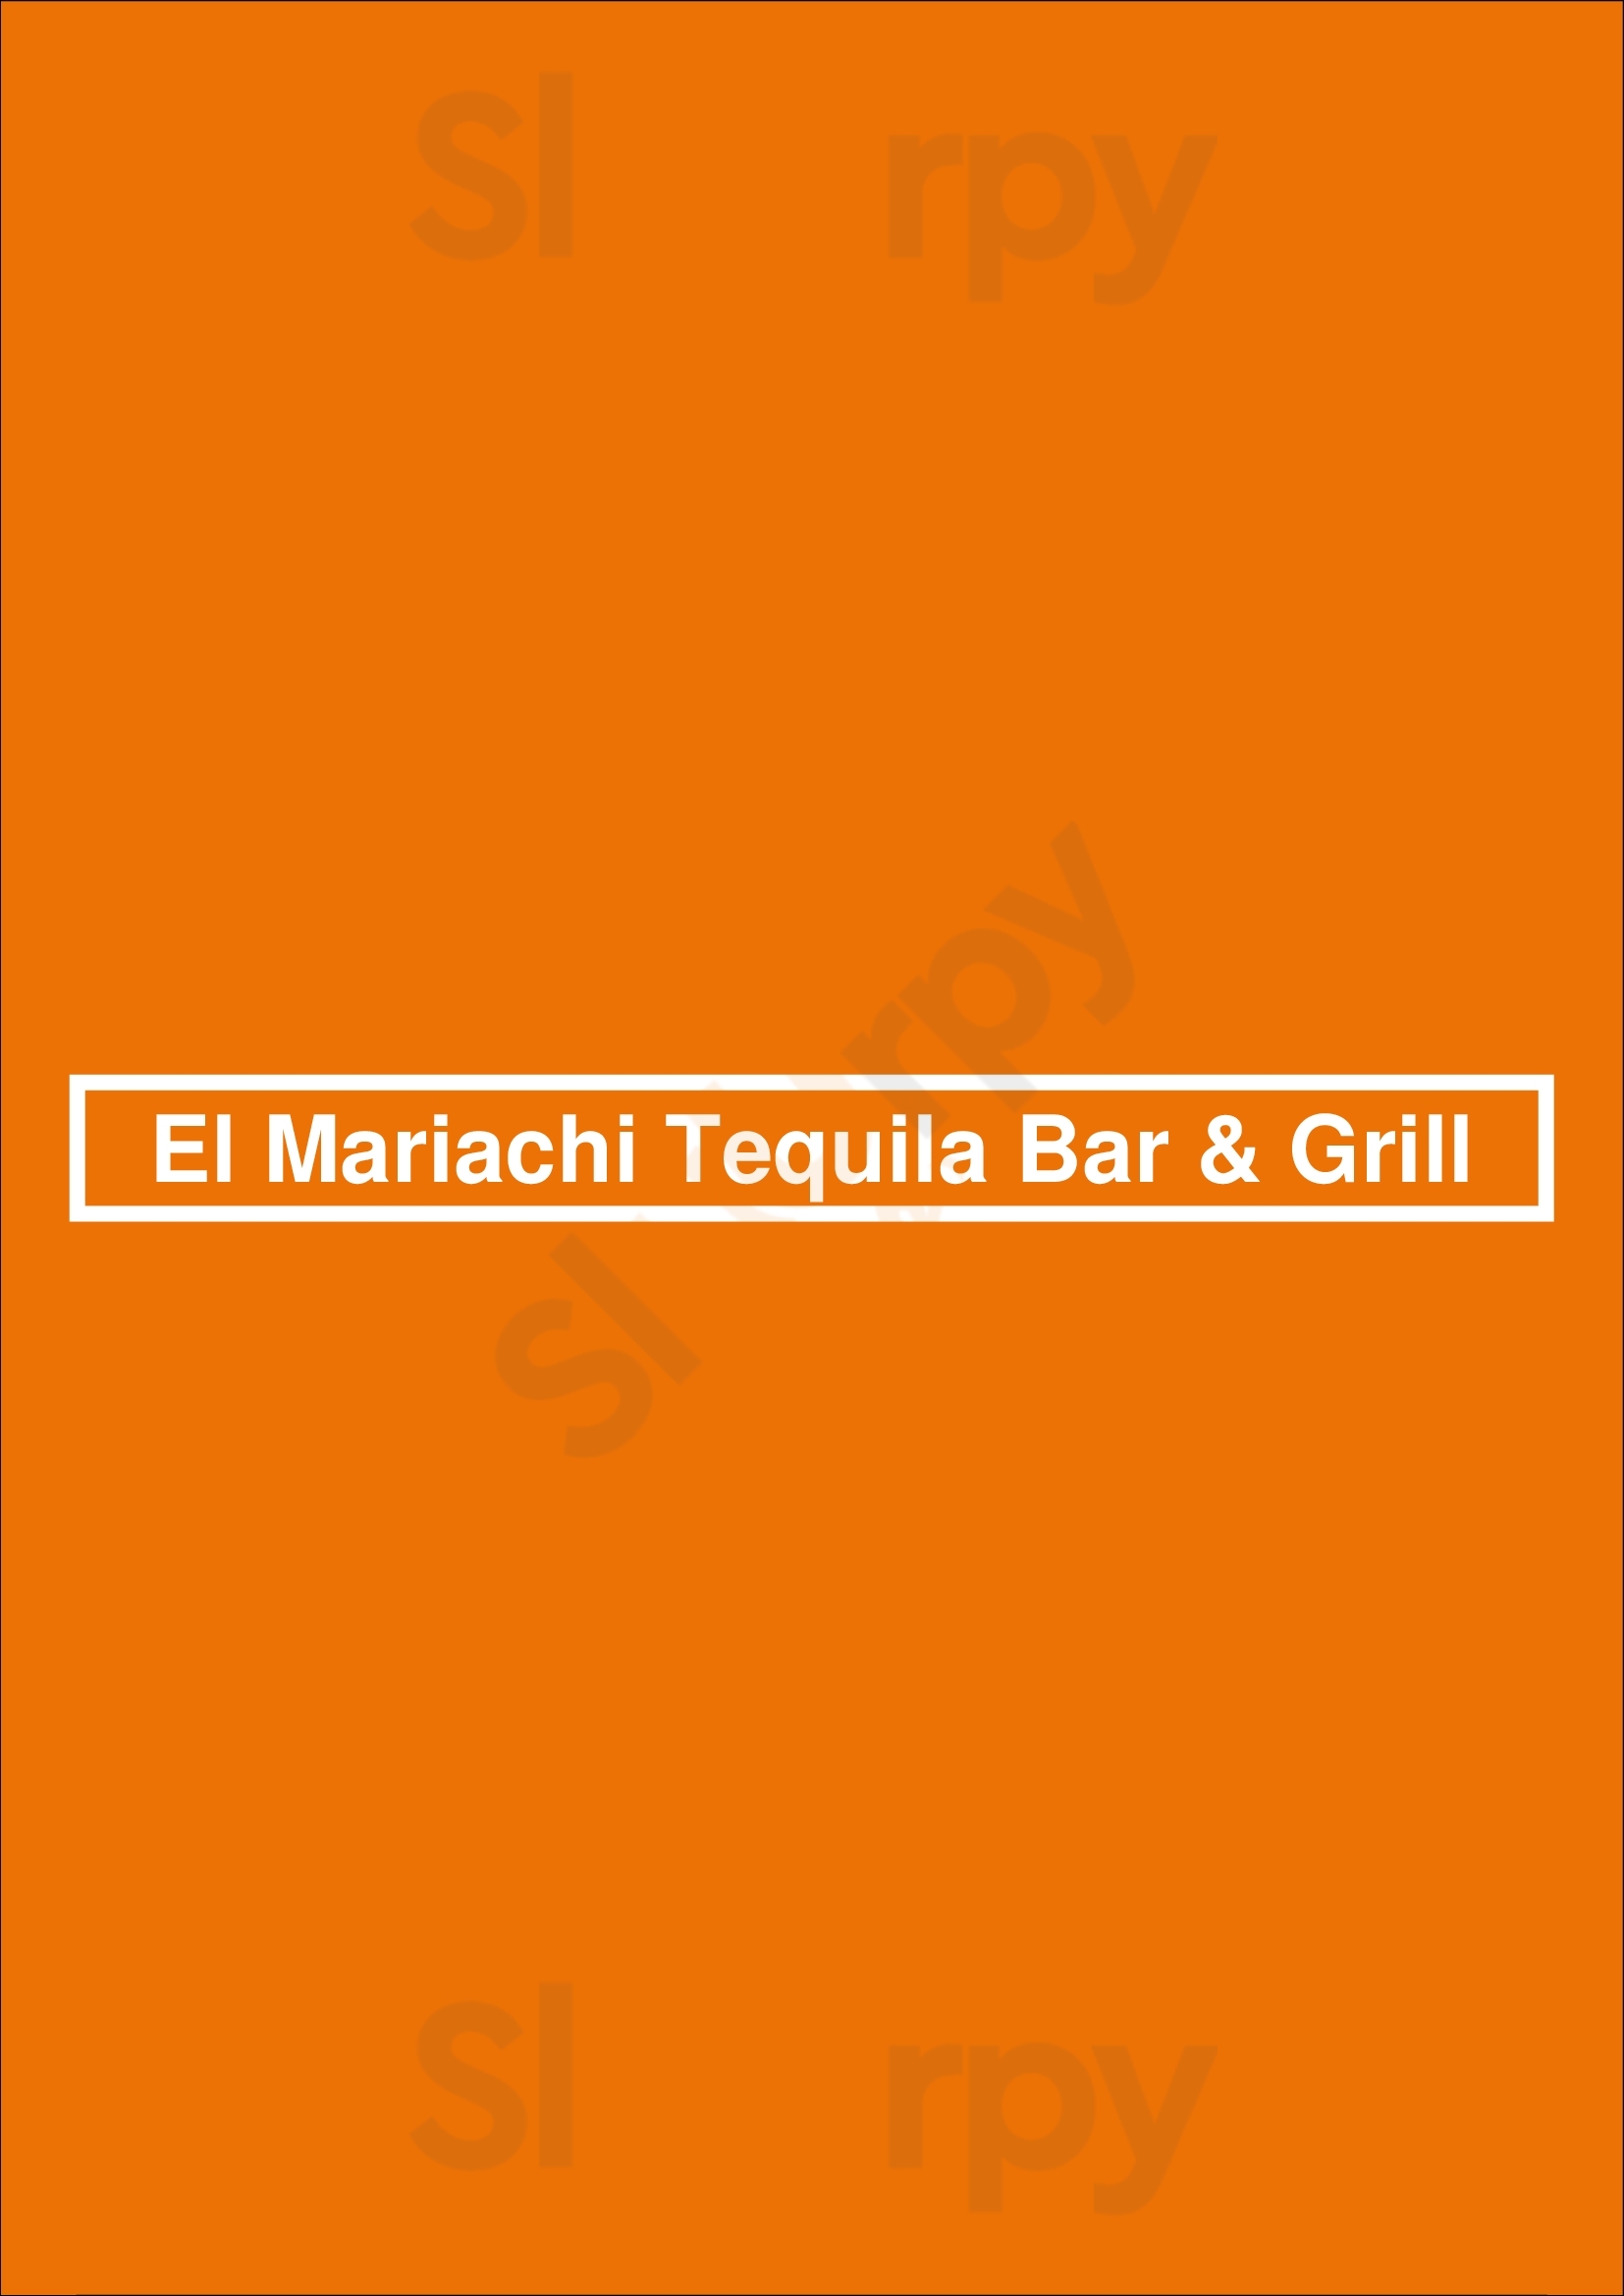 El Mariachi Tequila Bar & Grill Chicago Menu - 1